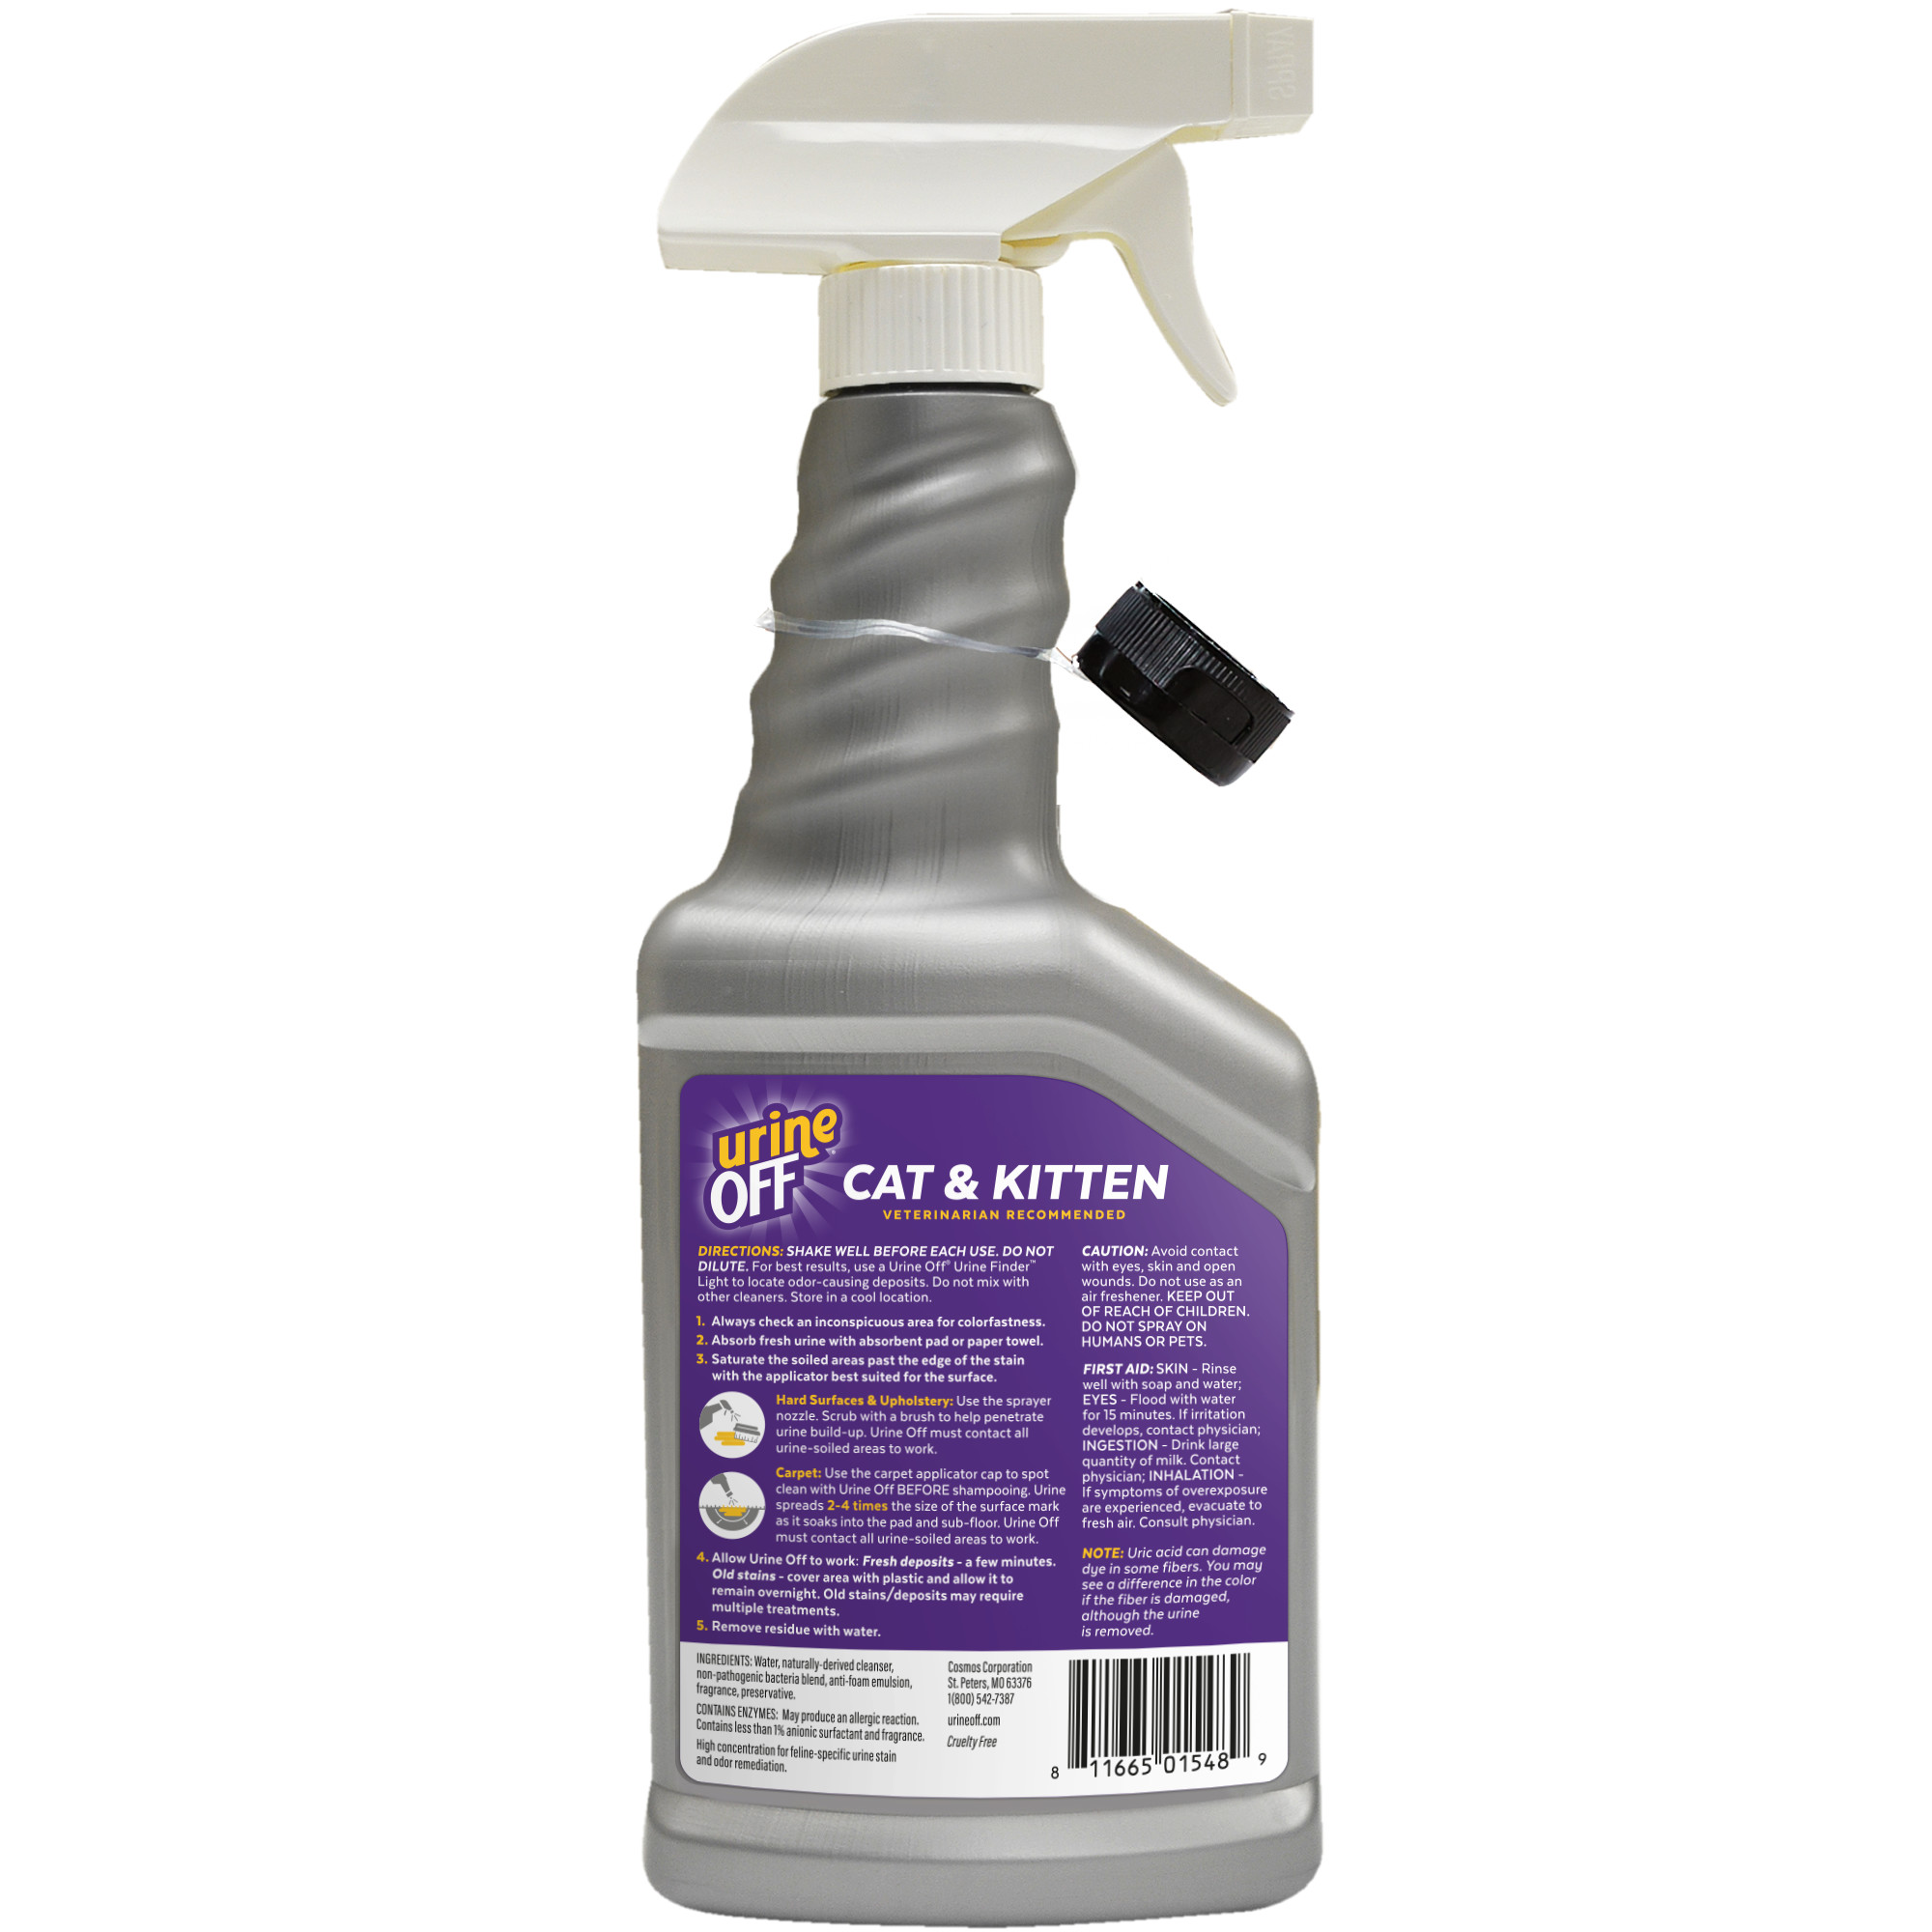 Cat & Kitten Formula with Hard Surface Sprayer & Carpet Applicator Cap